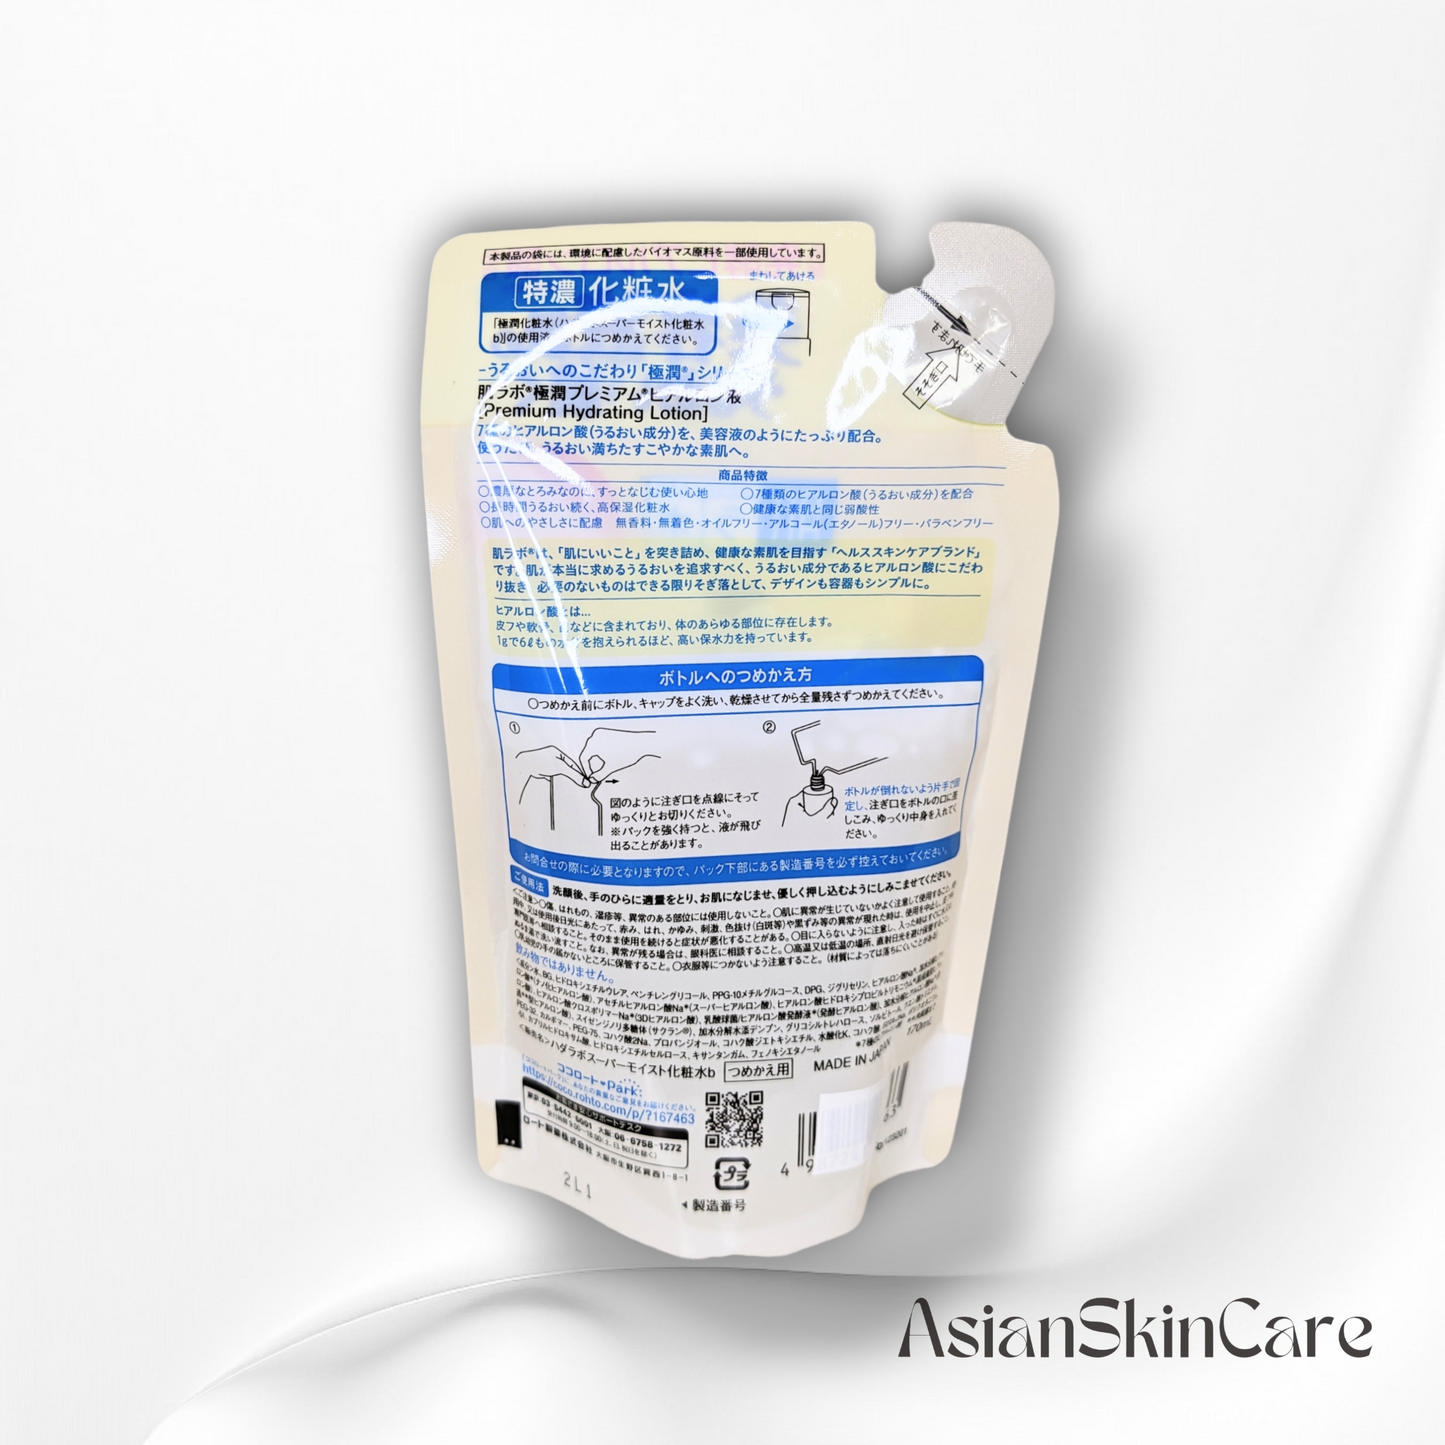 Sérum hydratant - Hada Labo Gokujyun Premium Hyaluronic Liquid - Recharge - 170ml : soin hydratant à l'acide hyaluronique